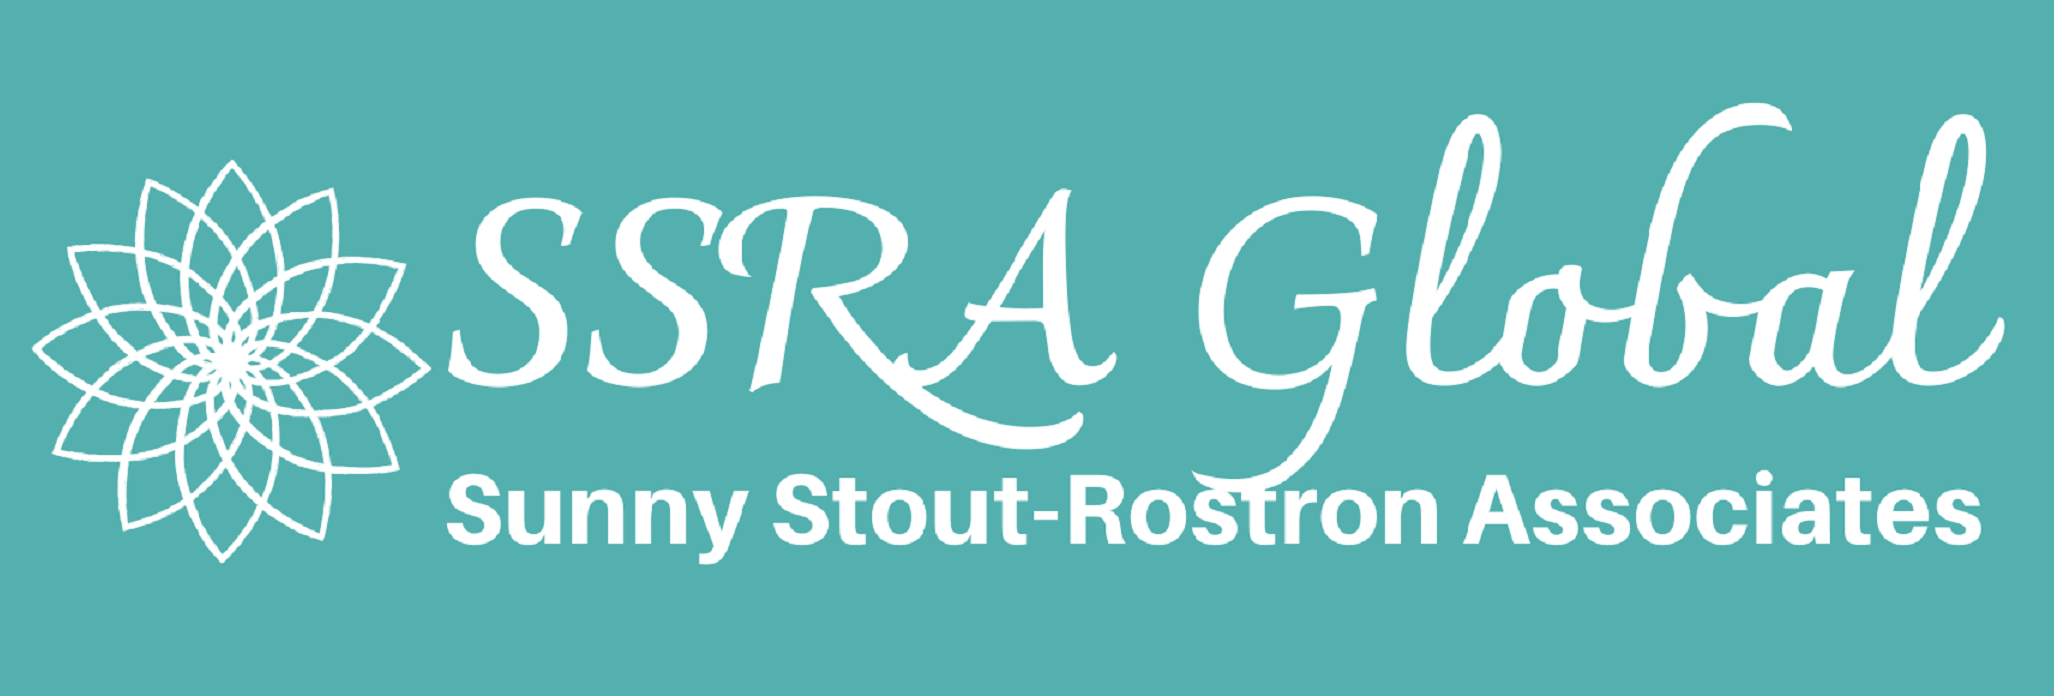 Sunny Stout-Rostron Associates